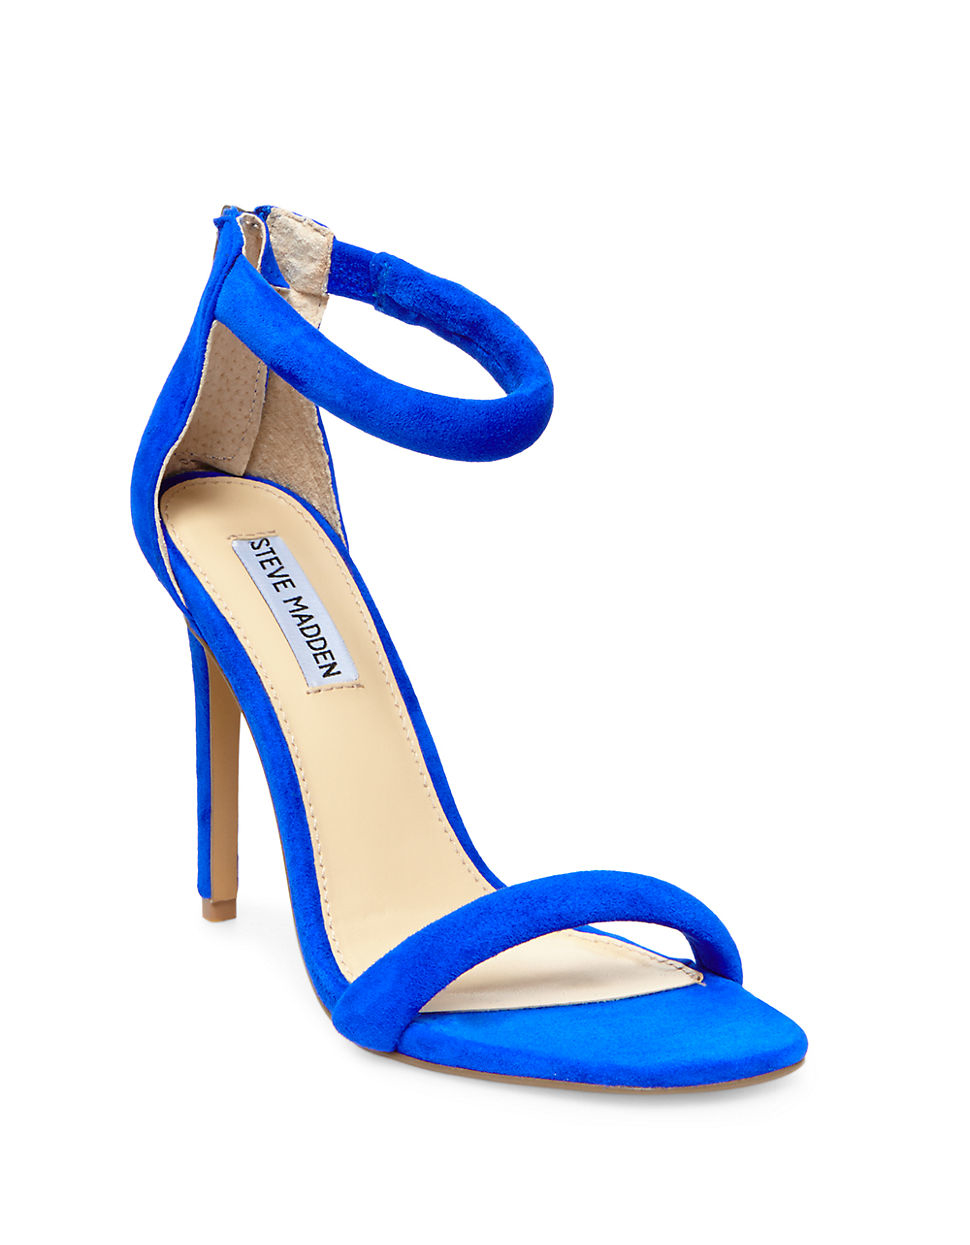 Steve madden Fancci Suede T-back Sandal Heels in Blue (Blue Suede) | Lyst